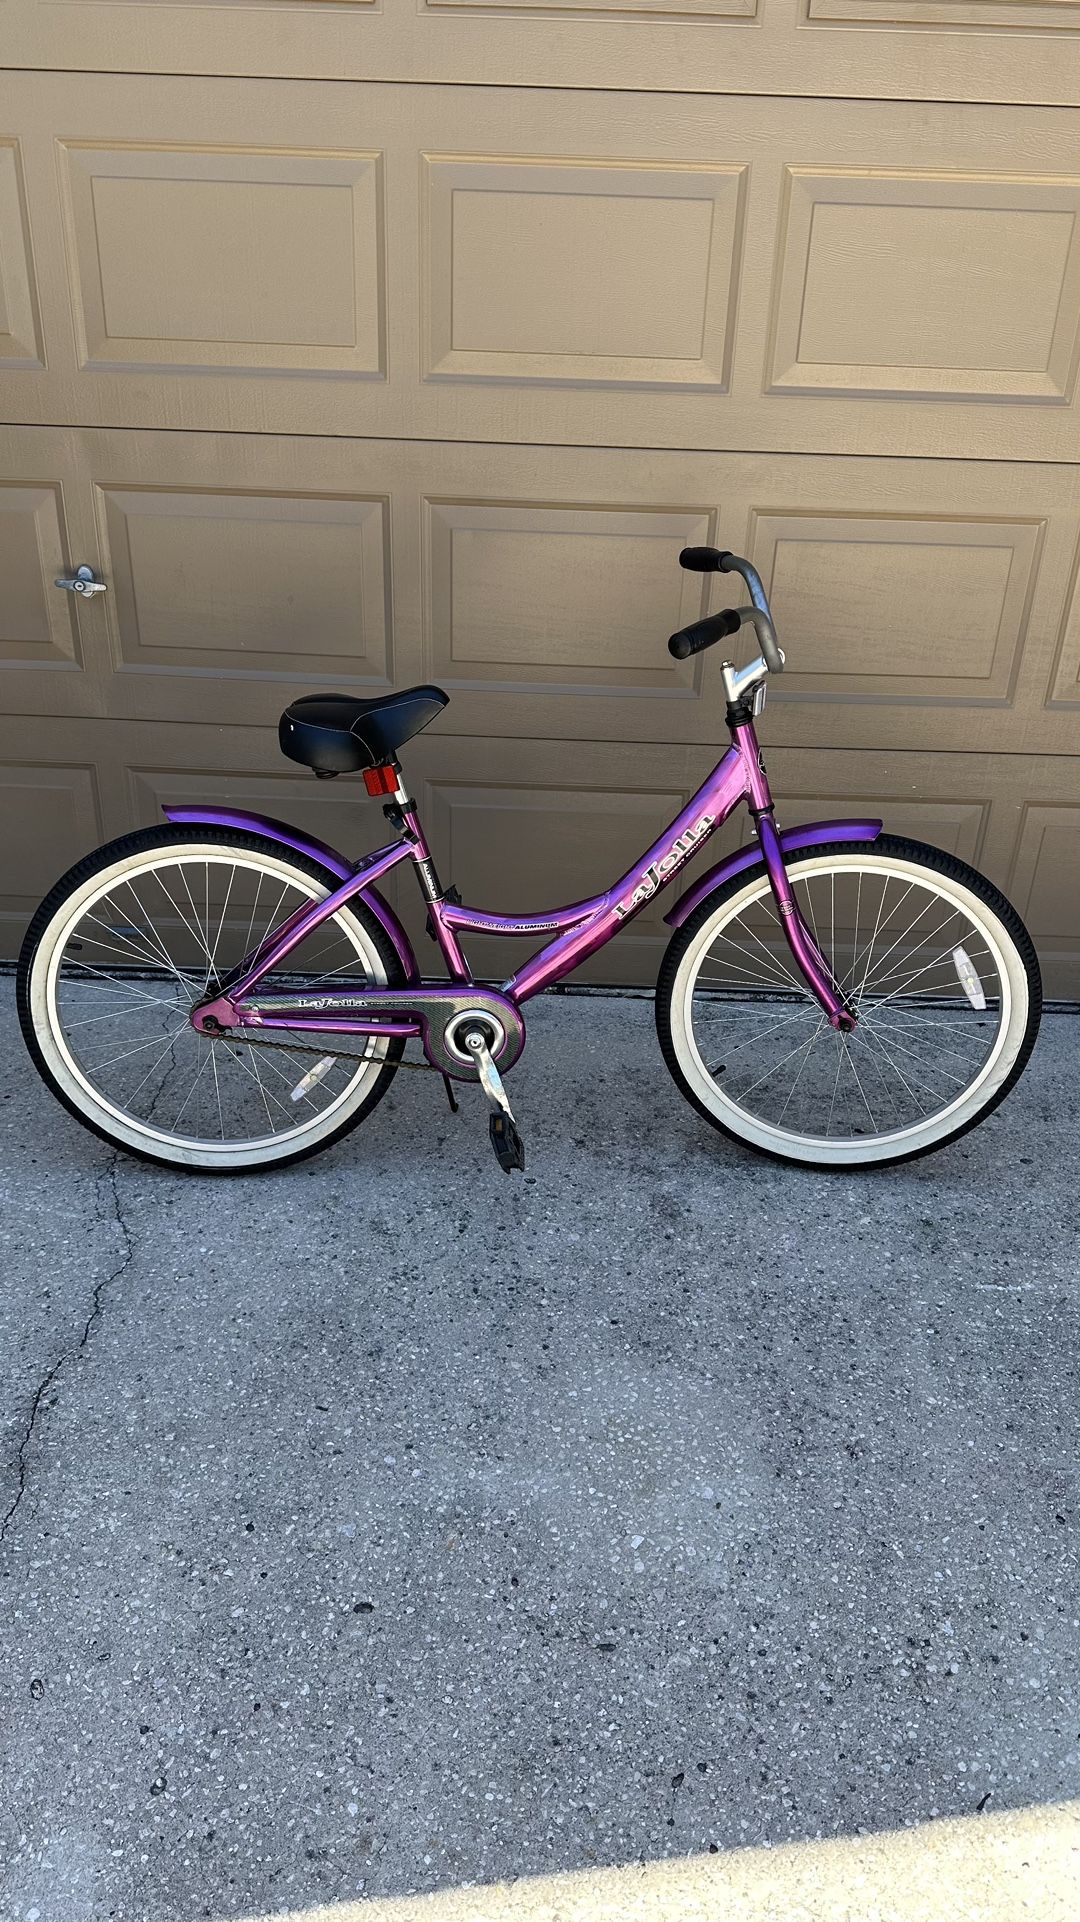 Kent Bicycle 24" Inch Wheel Tire La Jolla Girl Aluminum Beach  Cruiser Bike Purple Outdoor Exercise Fun